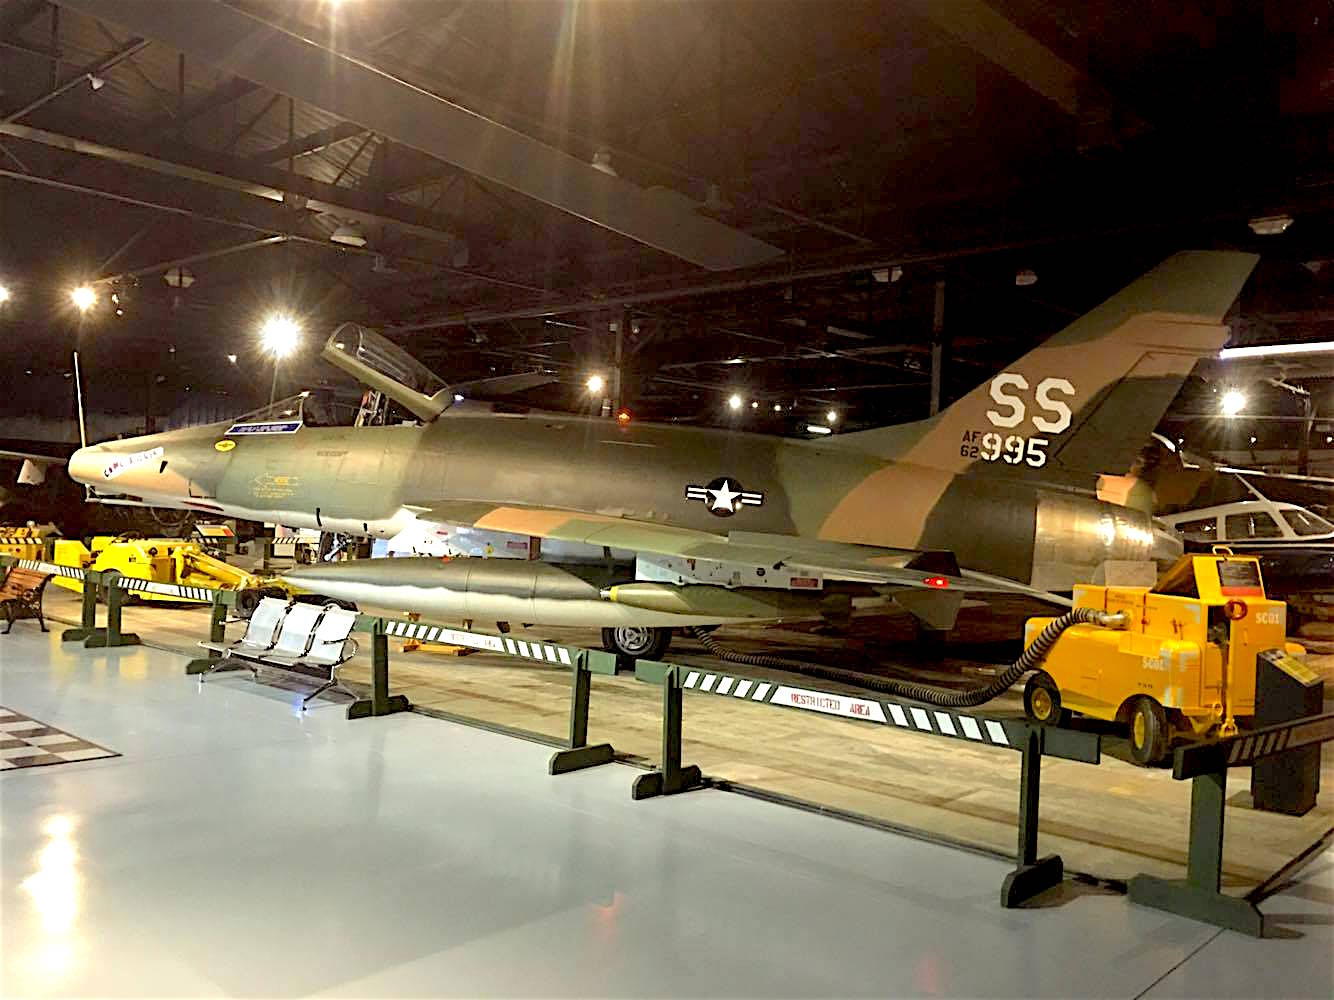 Museum of Aviation F-100 Super Sabre